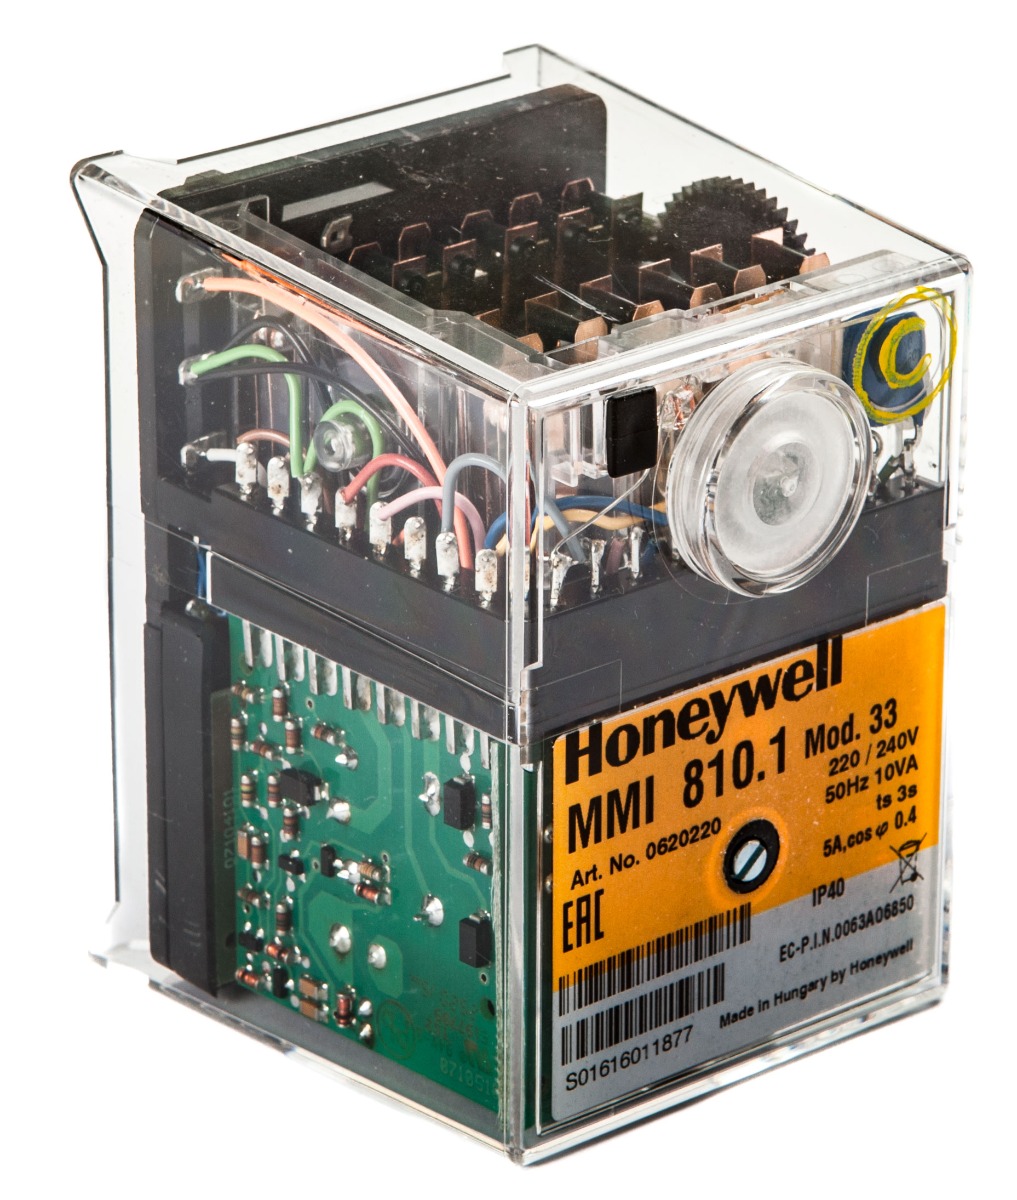 Satronic Control Box MMI810.1 MOD33 (0620220U)